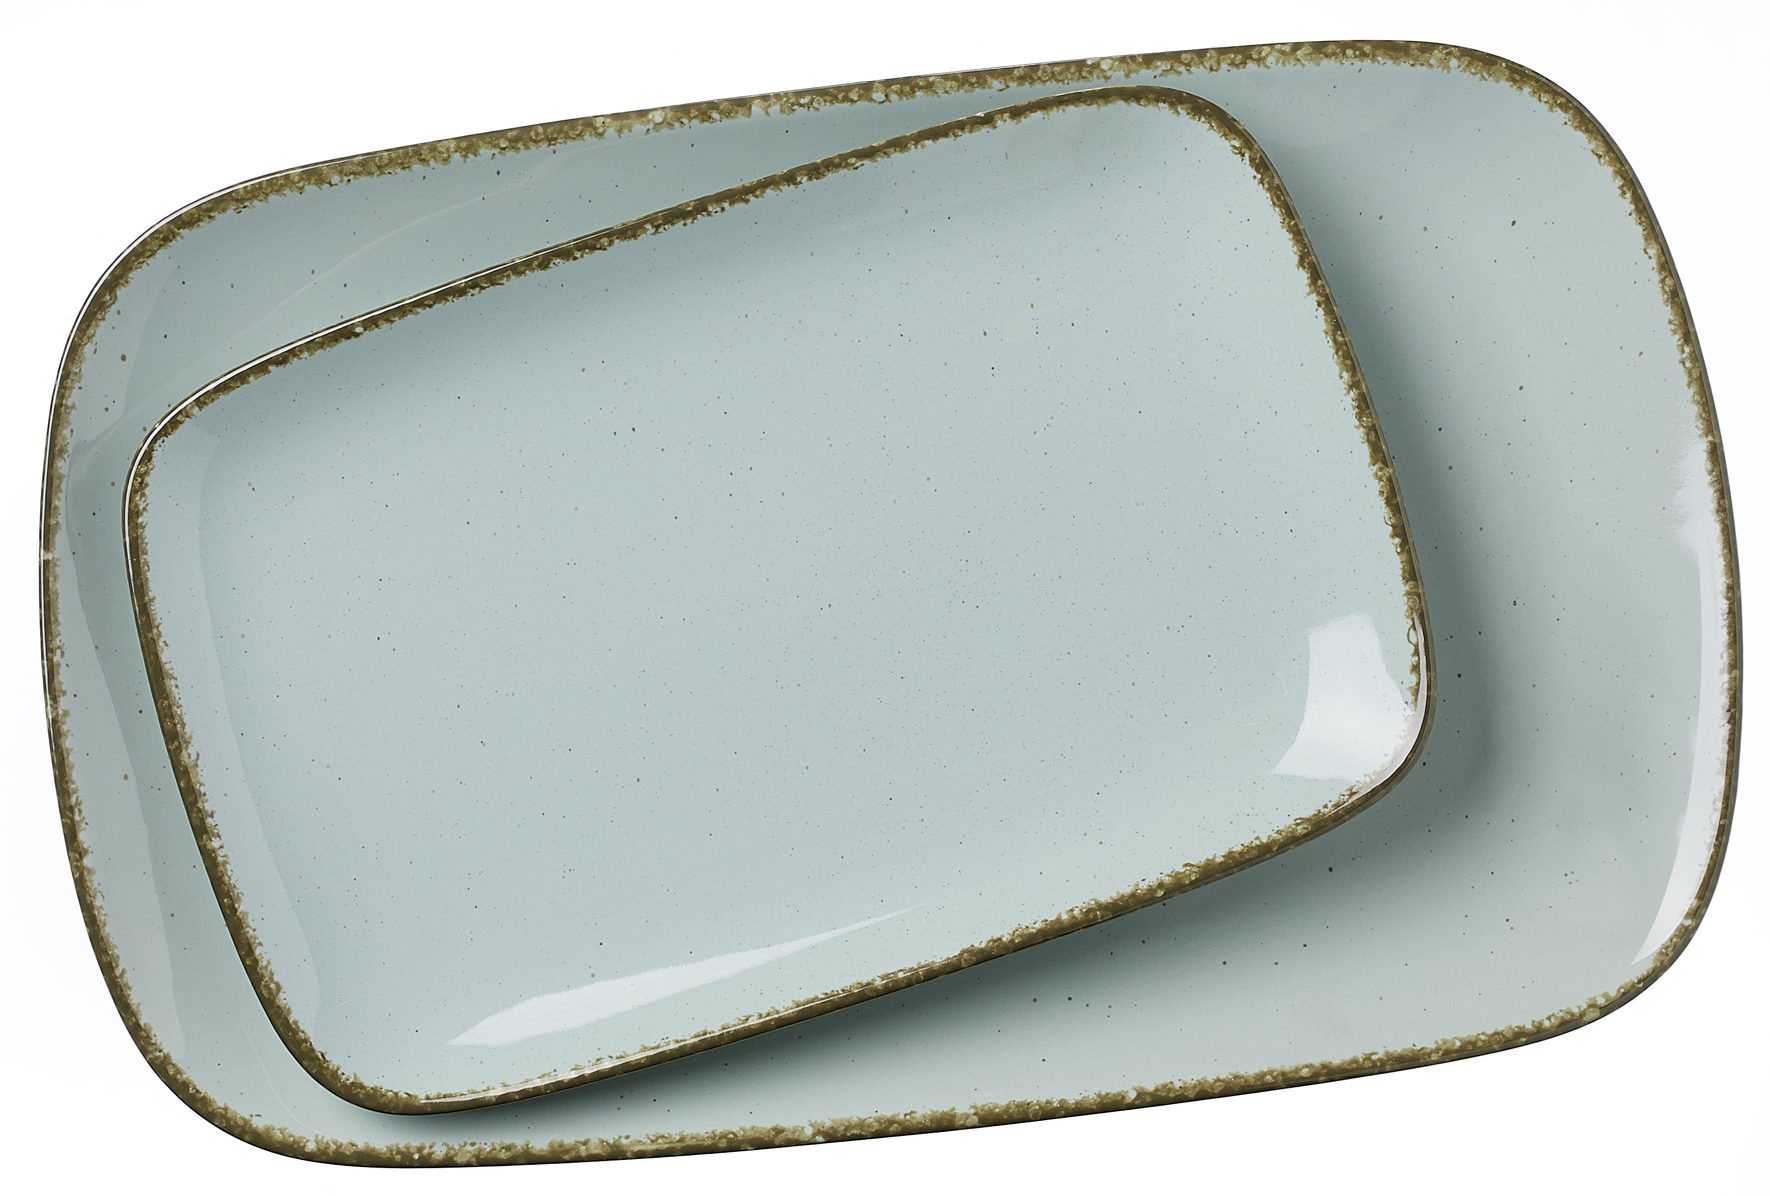 Tafelservice Ritzenhoff & breker aus Porzellan in Blau Servierplatten Casa blaues Porzellan - 2-teilig, Platten